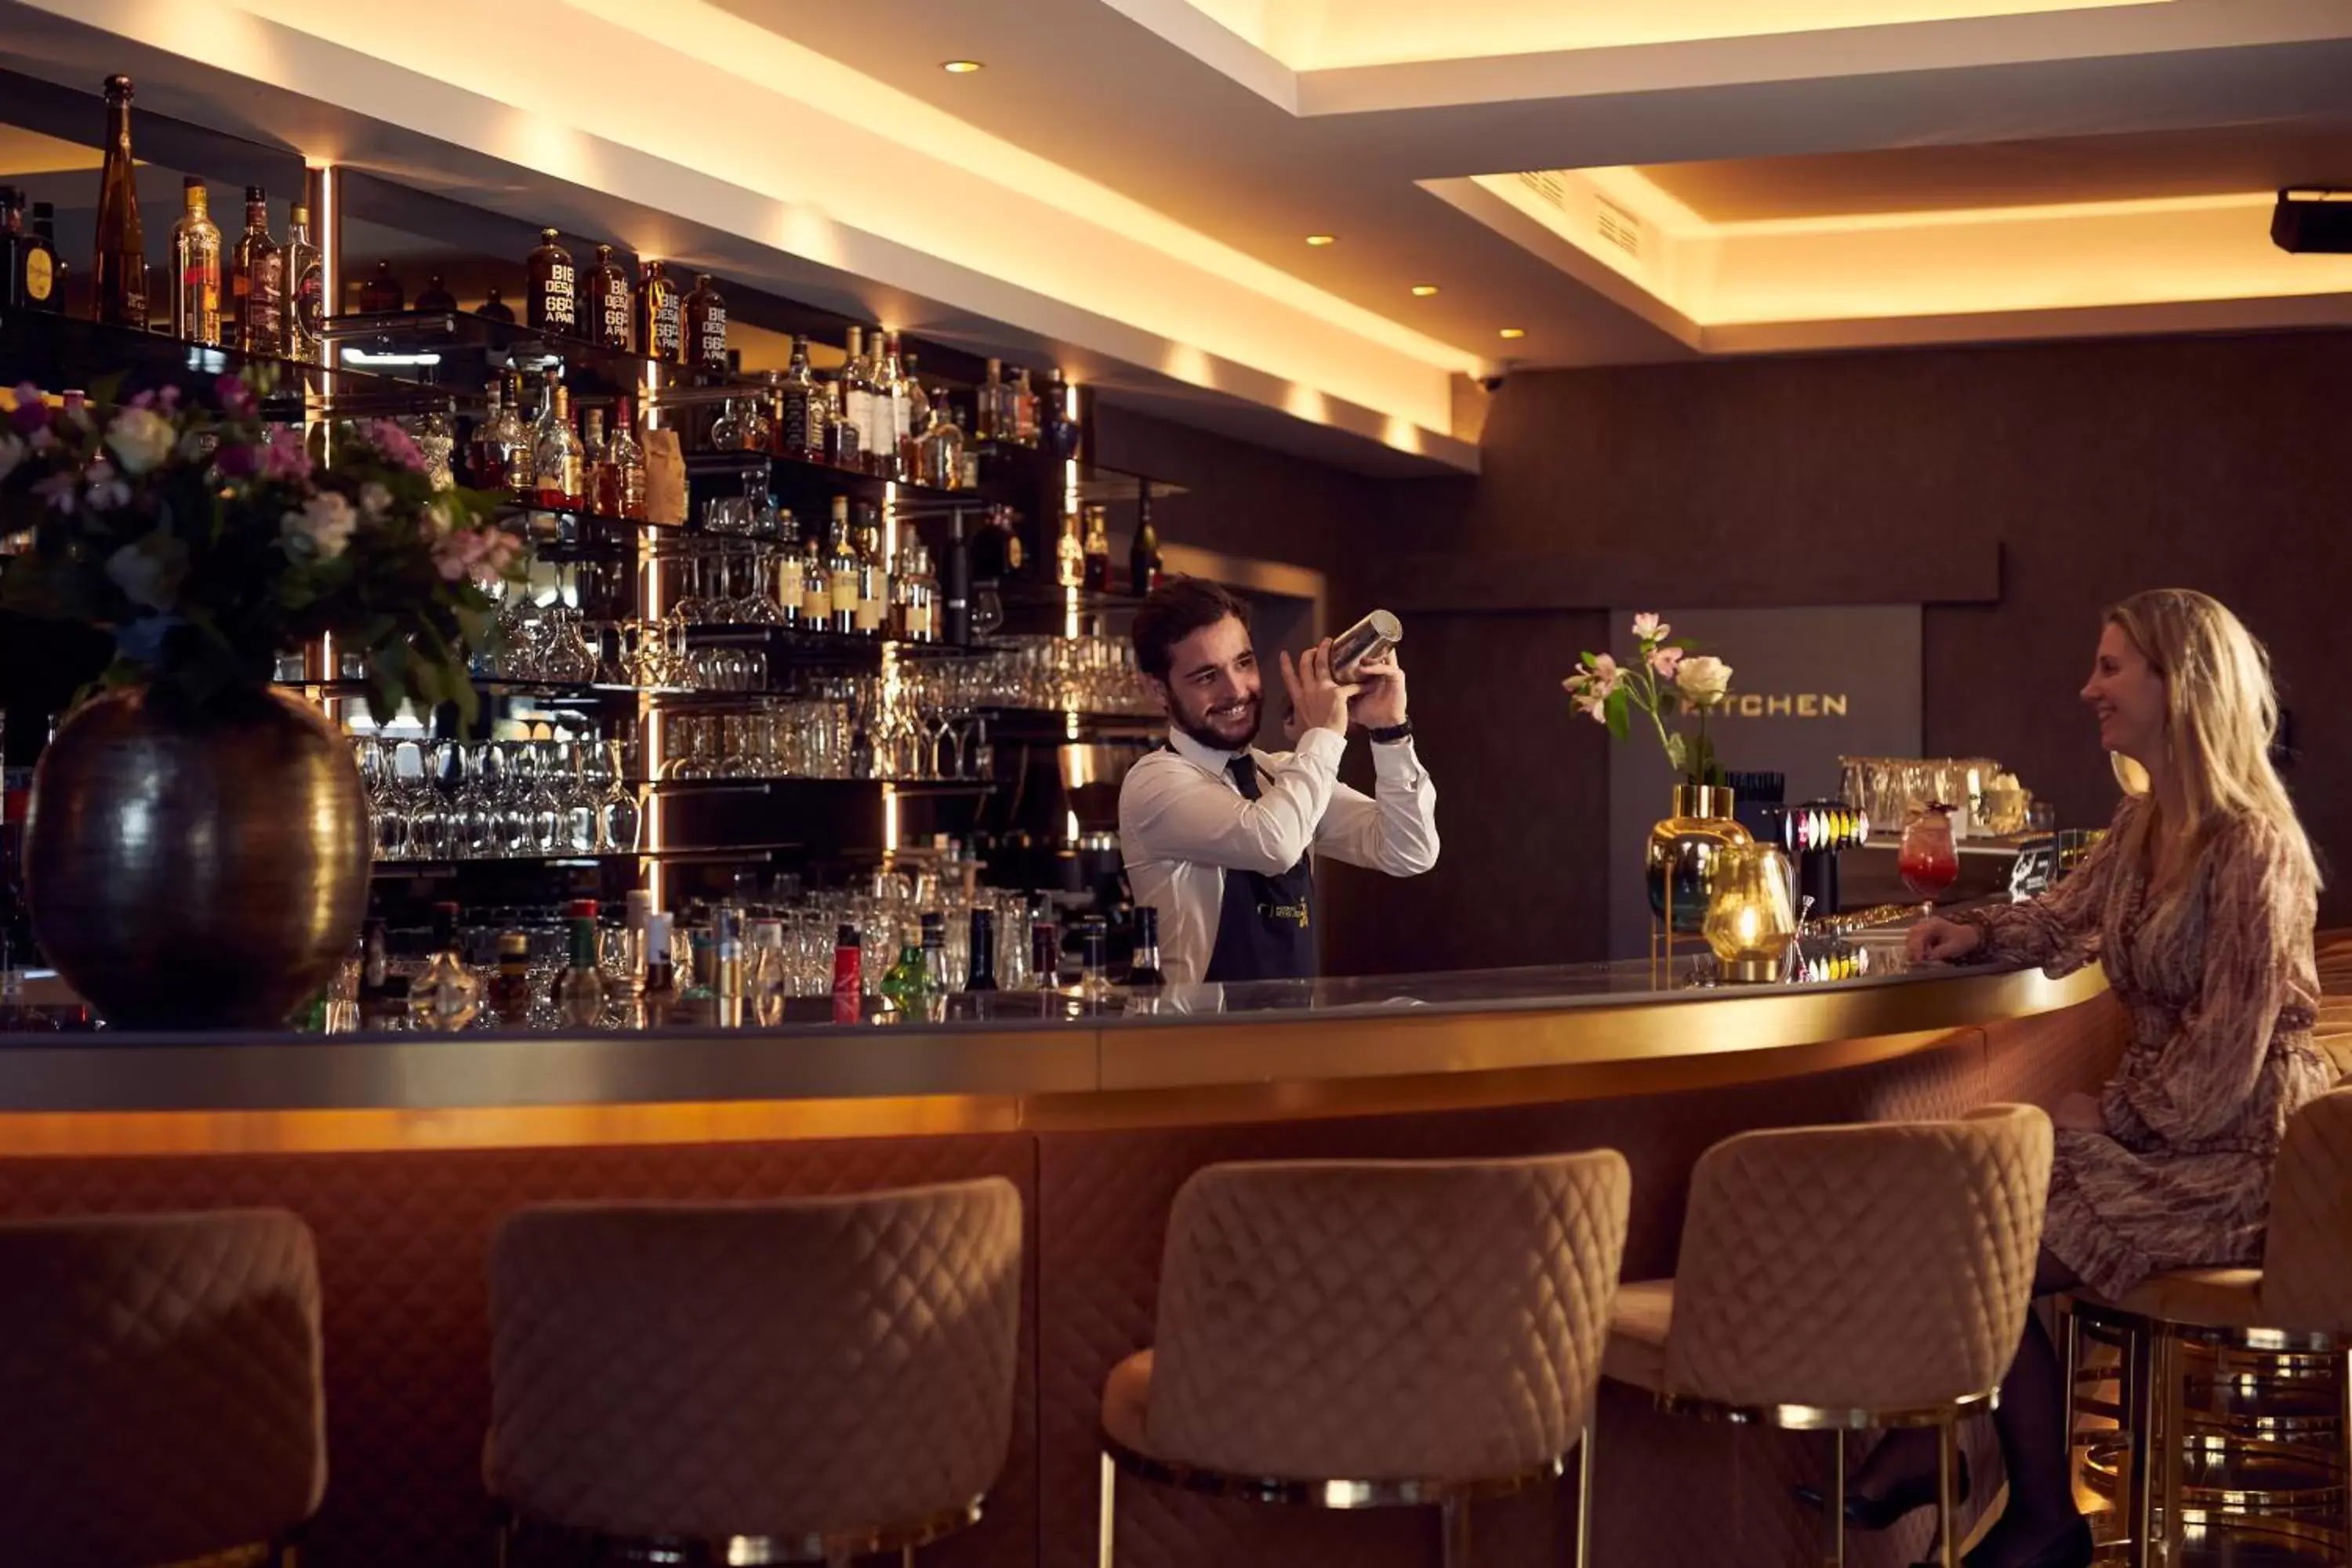 Lounge/Bar in Van Der Valk Sélys Liège Hotel & Spa